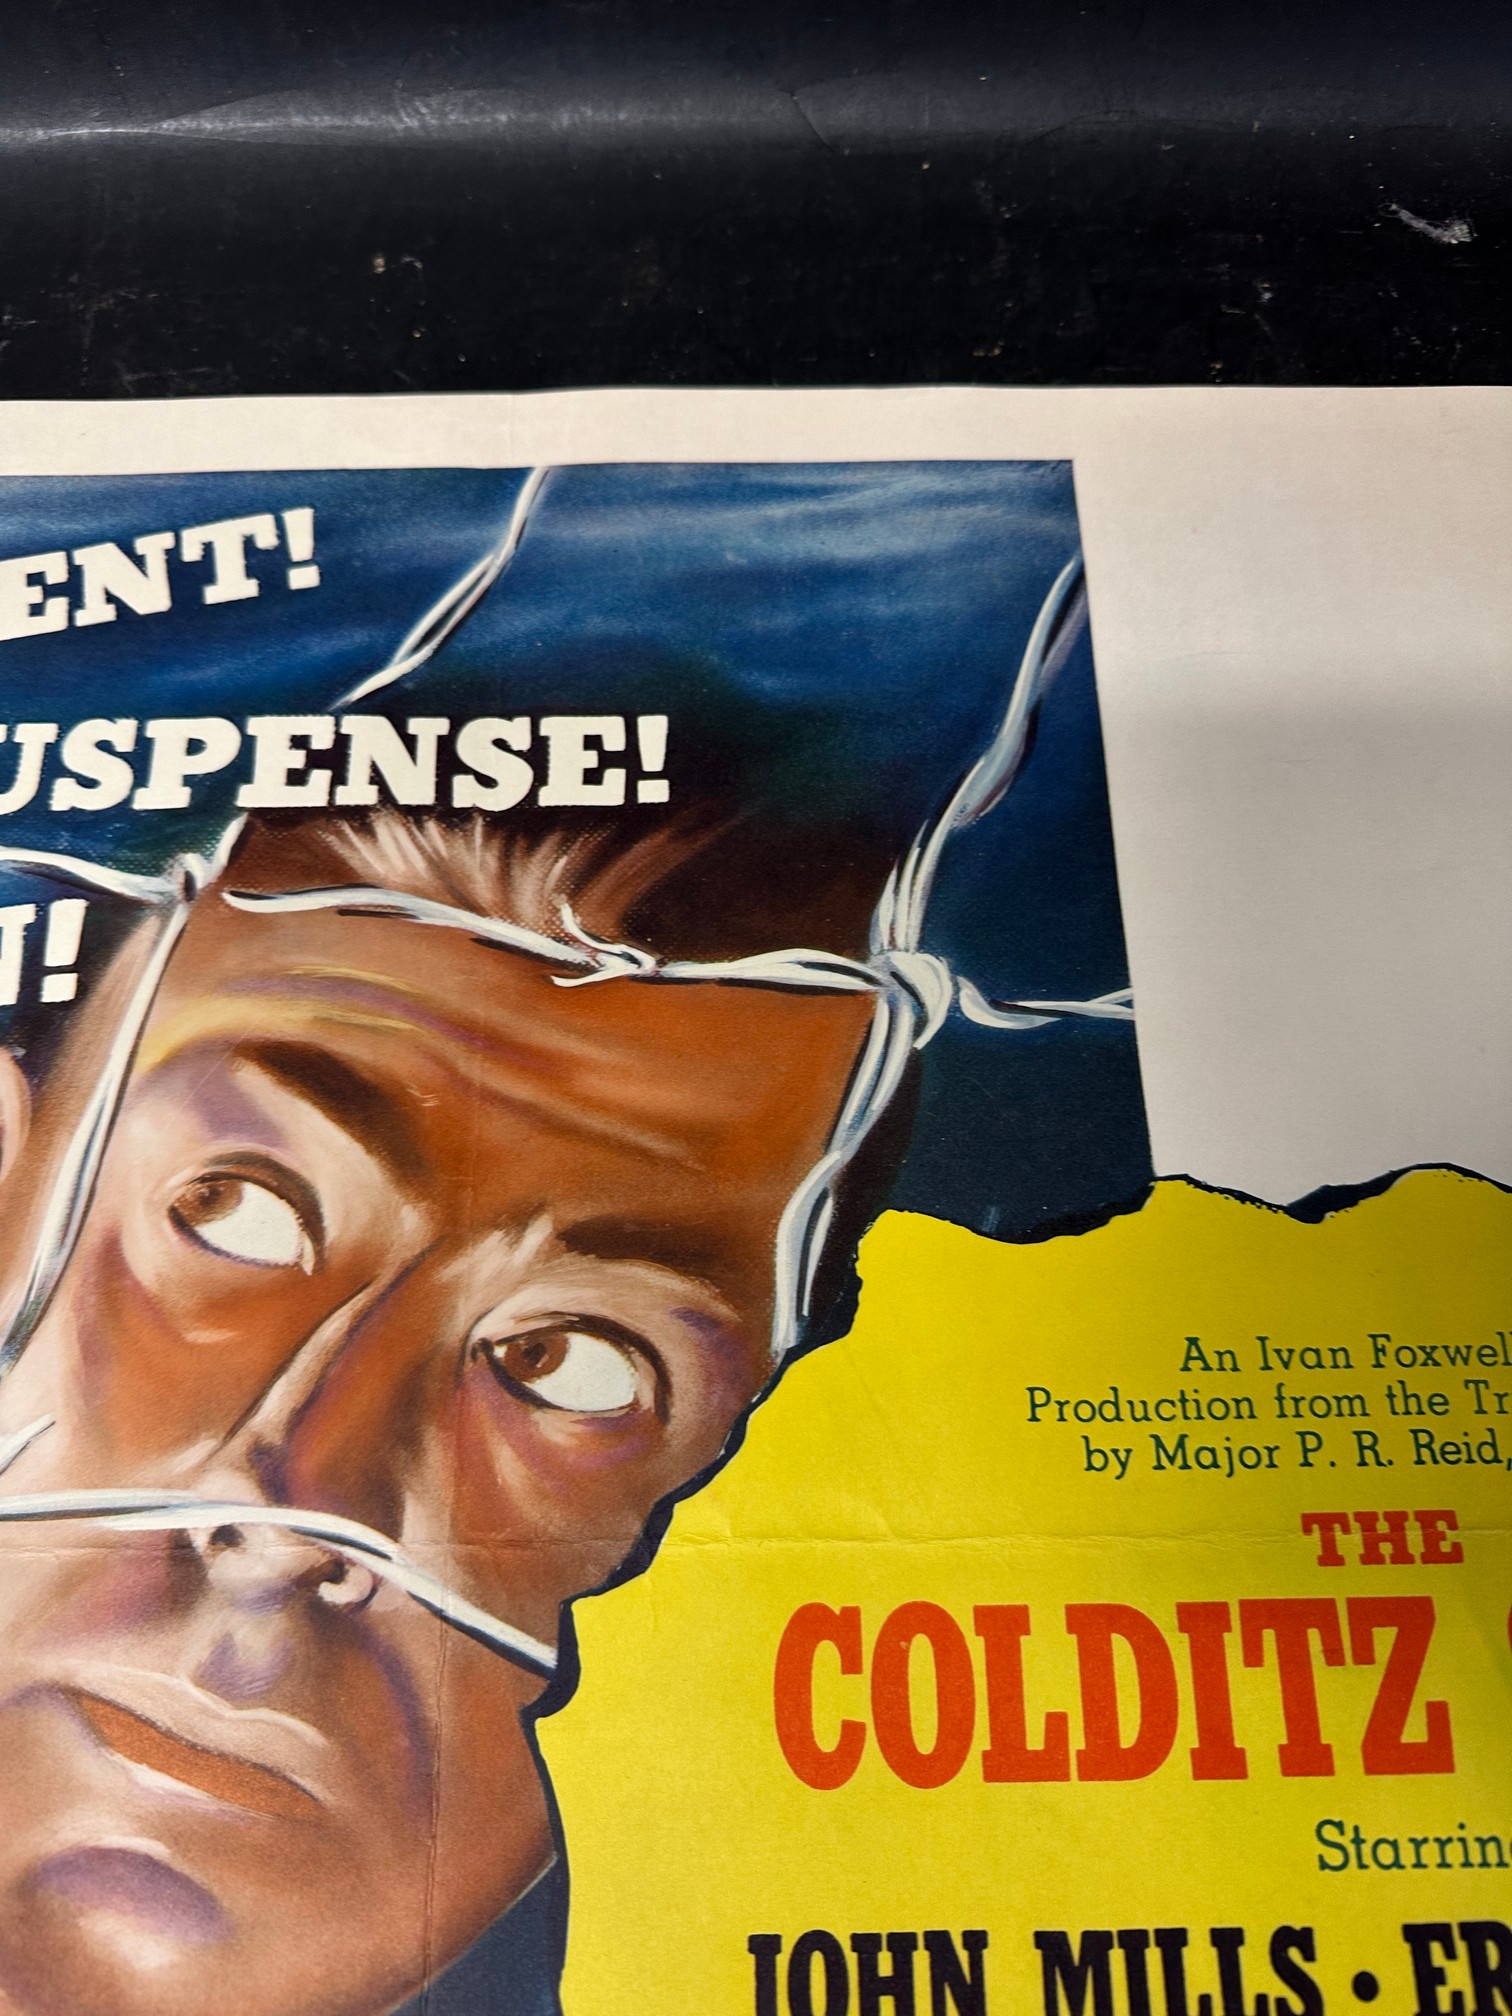 An original 1956 USA film poster for The Colditz Story starring John Mills, Eric Portman, - Image 5 of 8